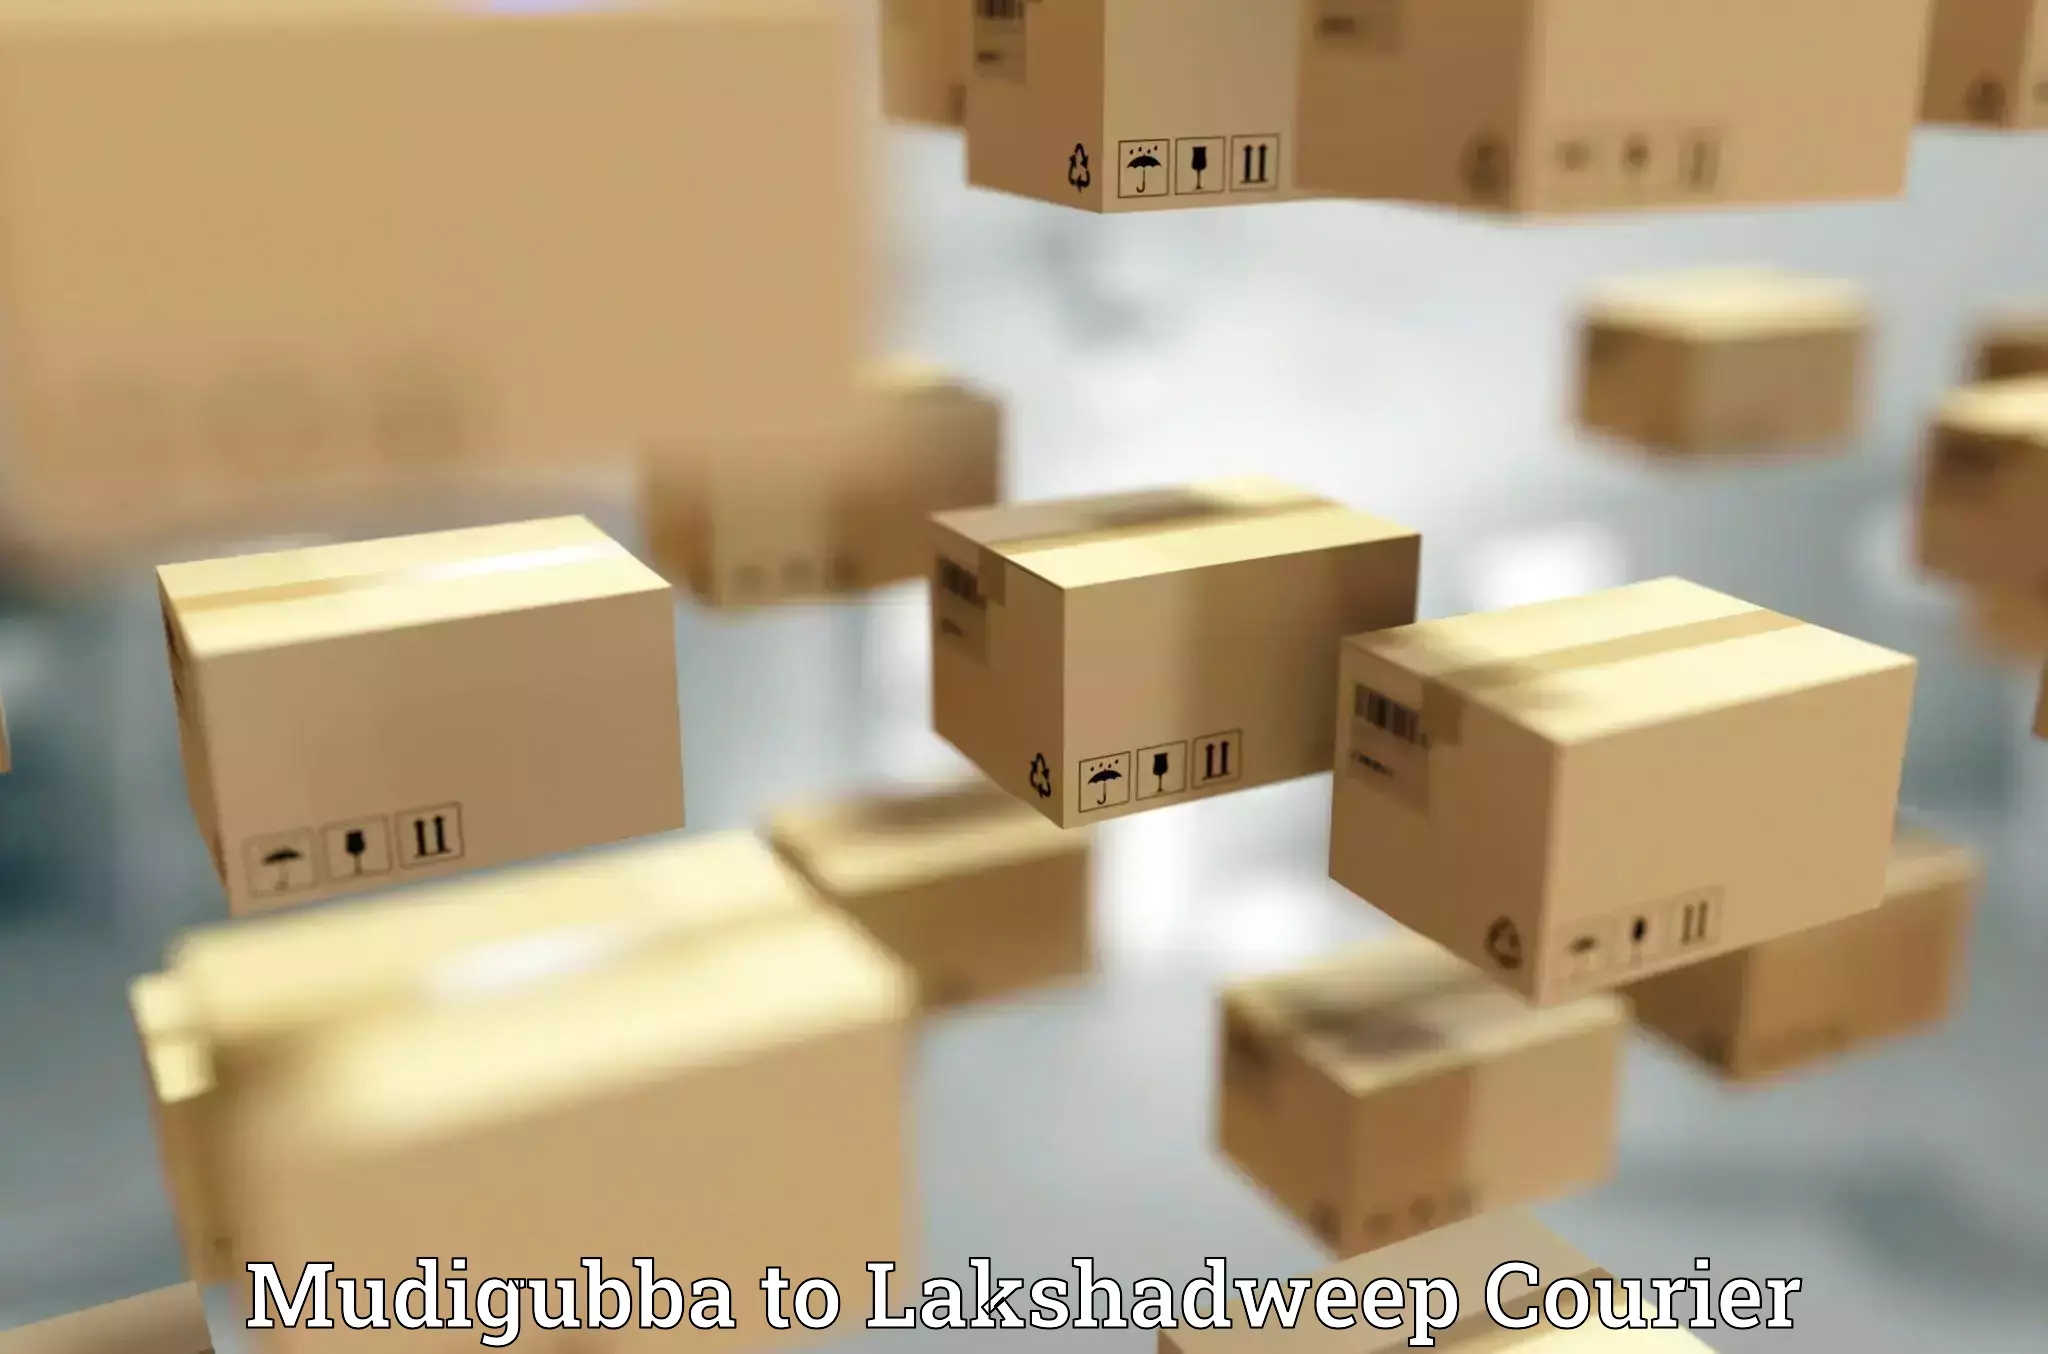 Enhanced tracking features Mudigubba to Lakshadweep